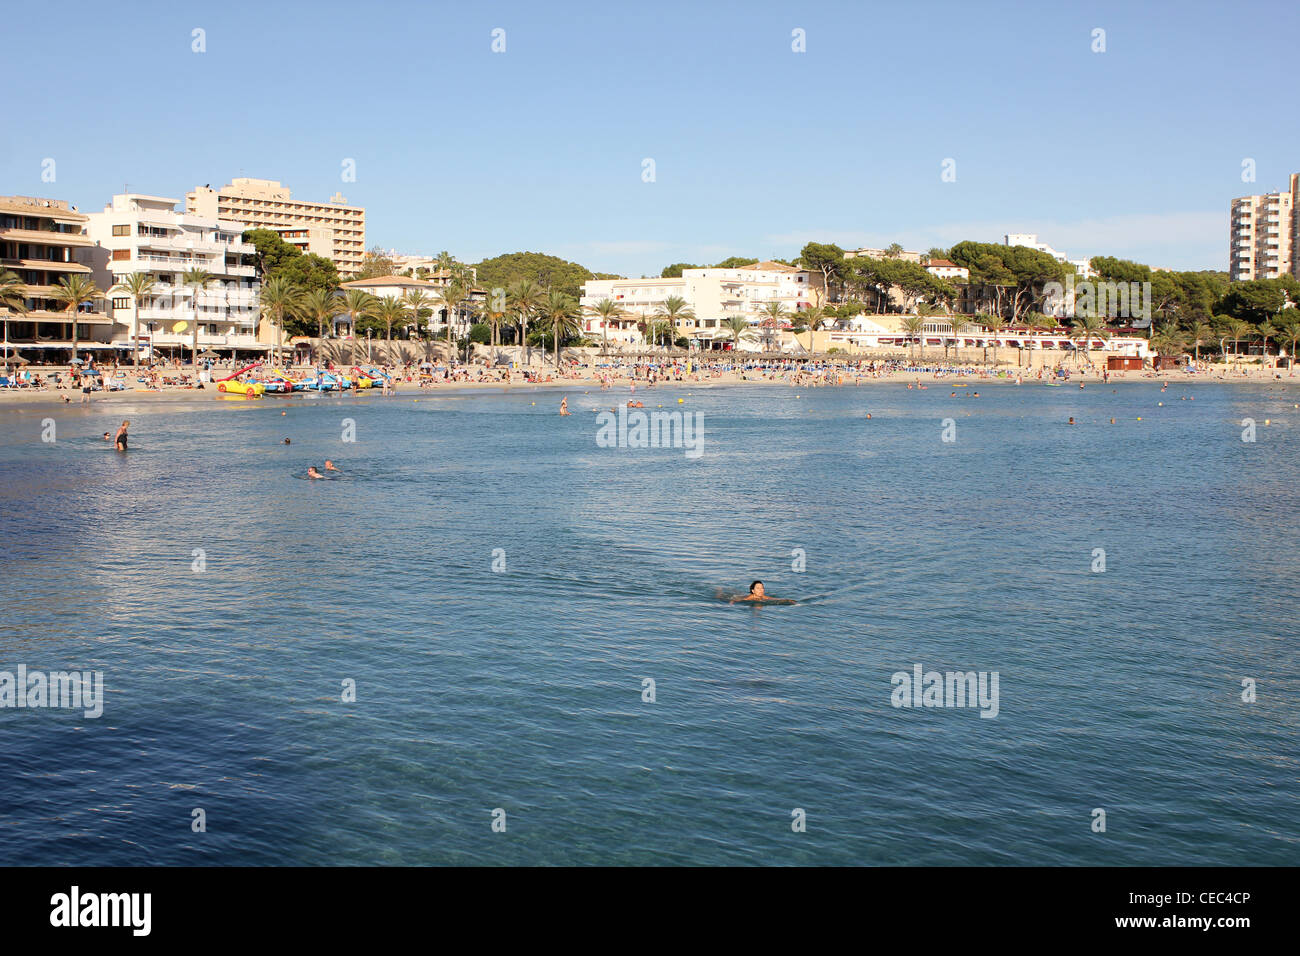 Beach panorama at Paguera / Peguera, Calvia, South West Mallorca / Majorca, Balearic Islands, Spain. Stock Photo